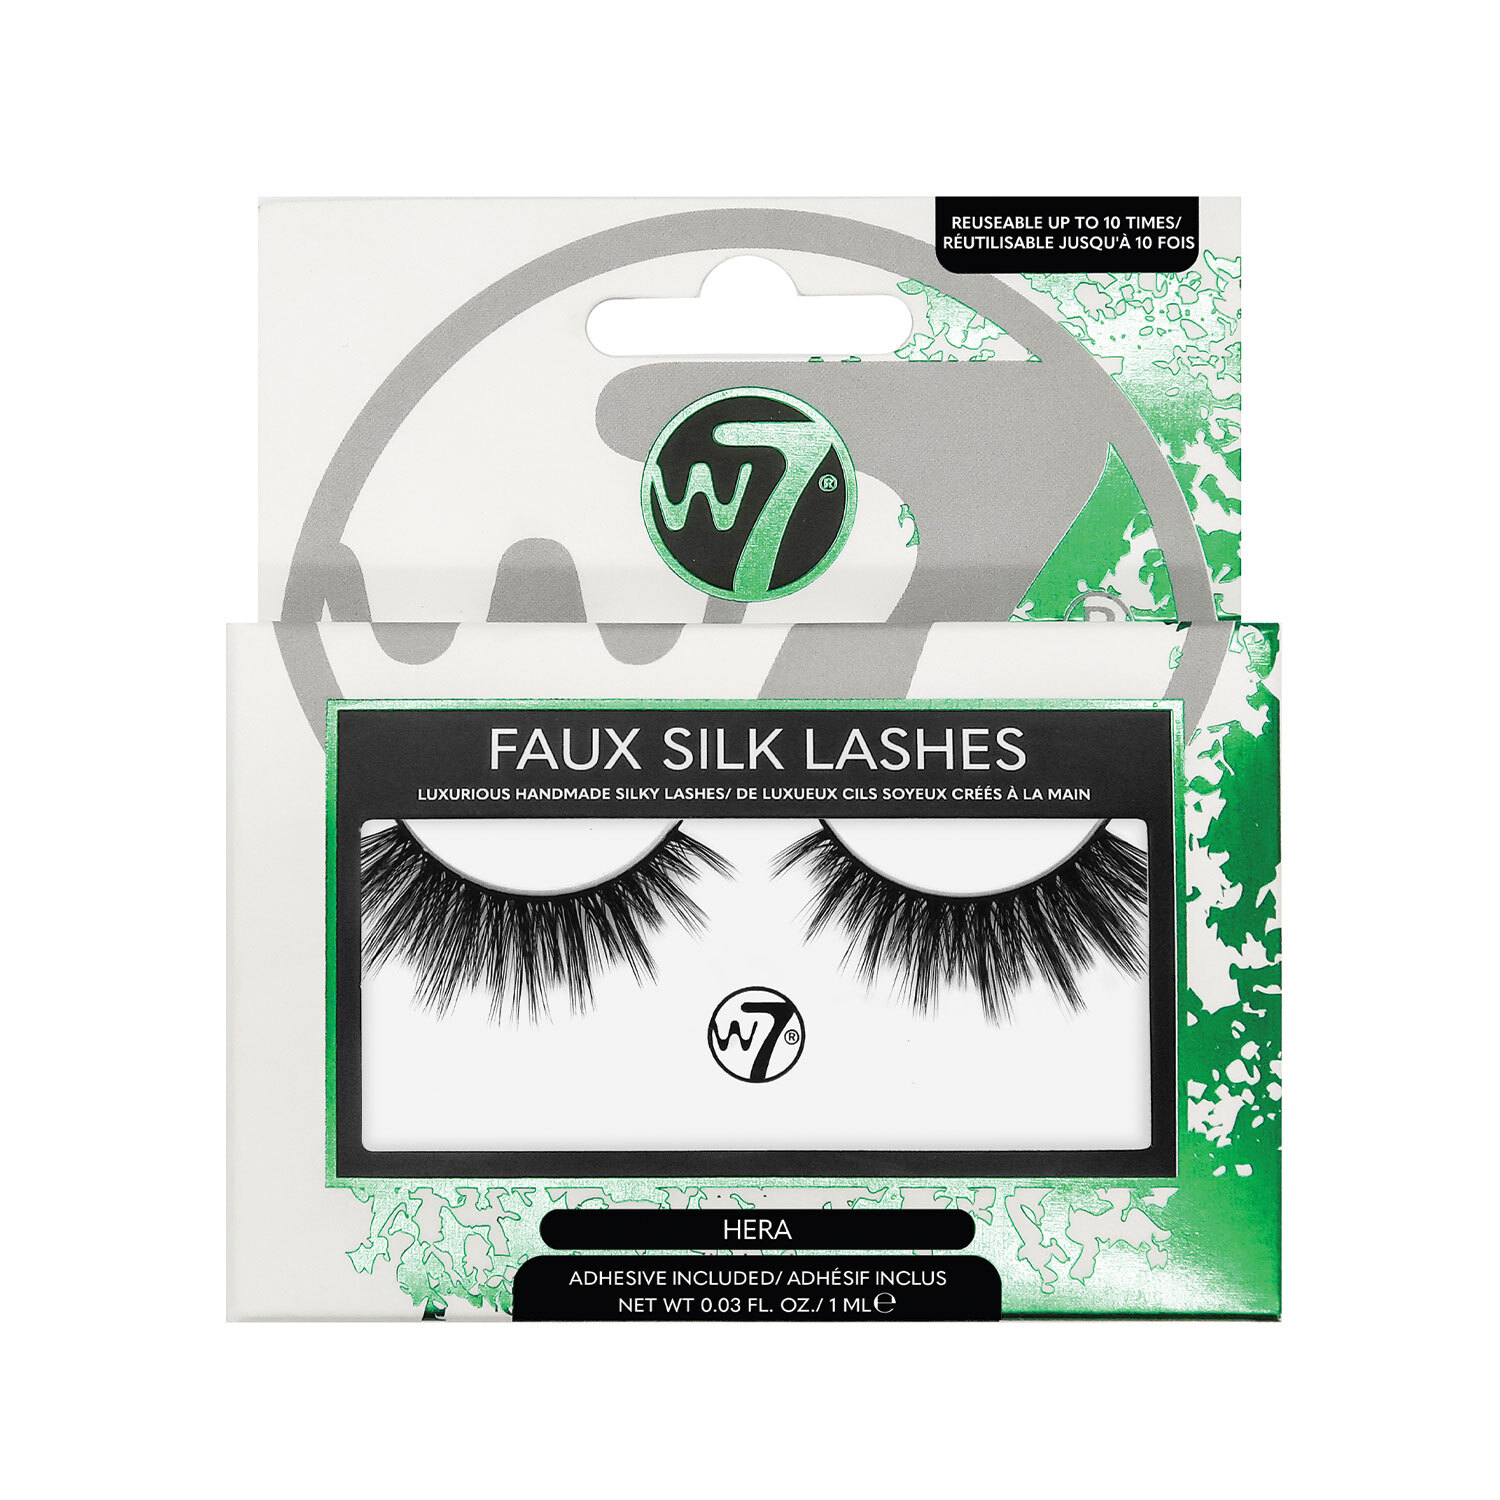 W7 Hera Faux Silk Lashes Image